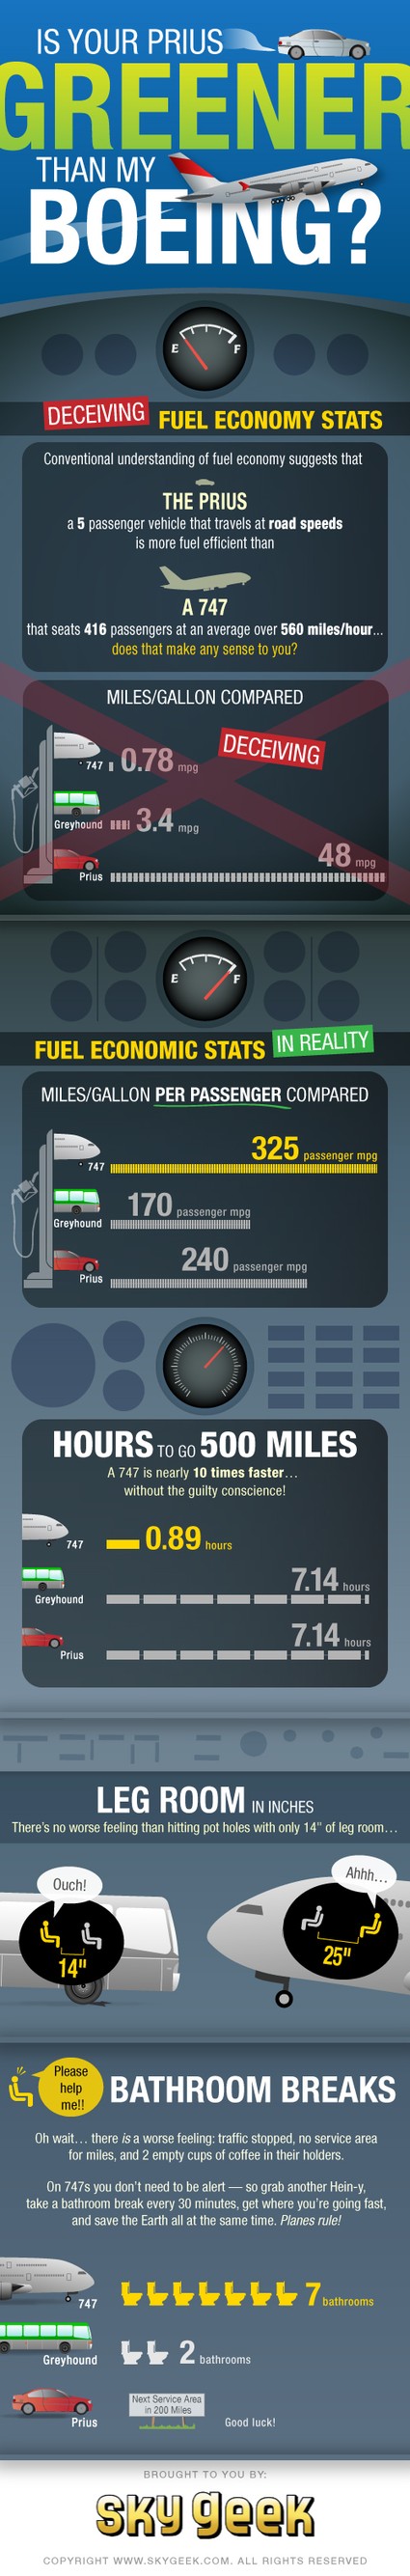 Skygeek infographic Prius greener than Boeing?